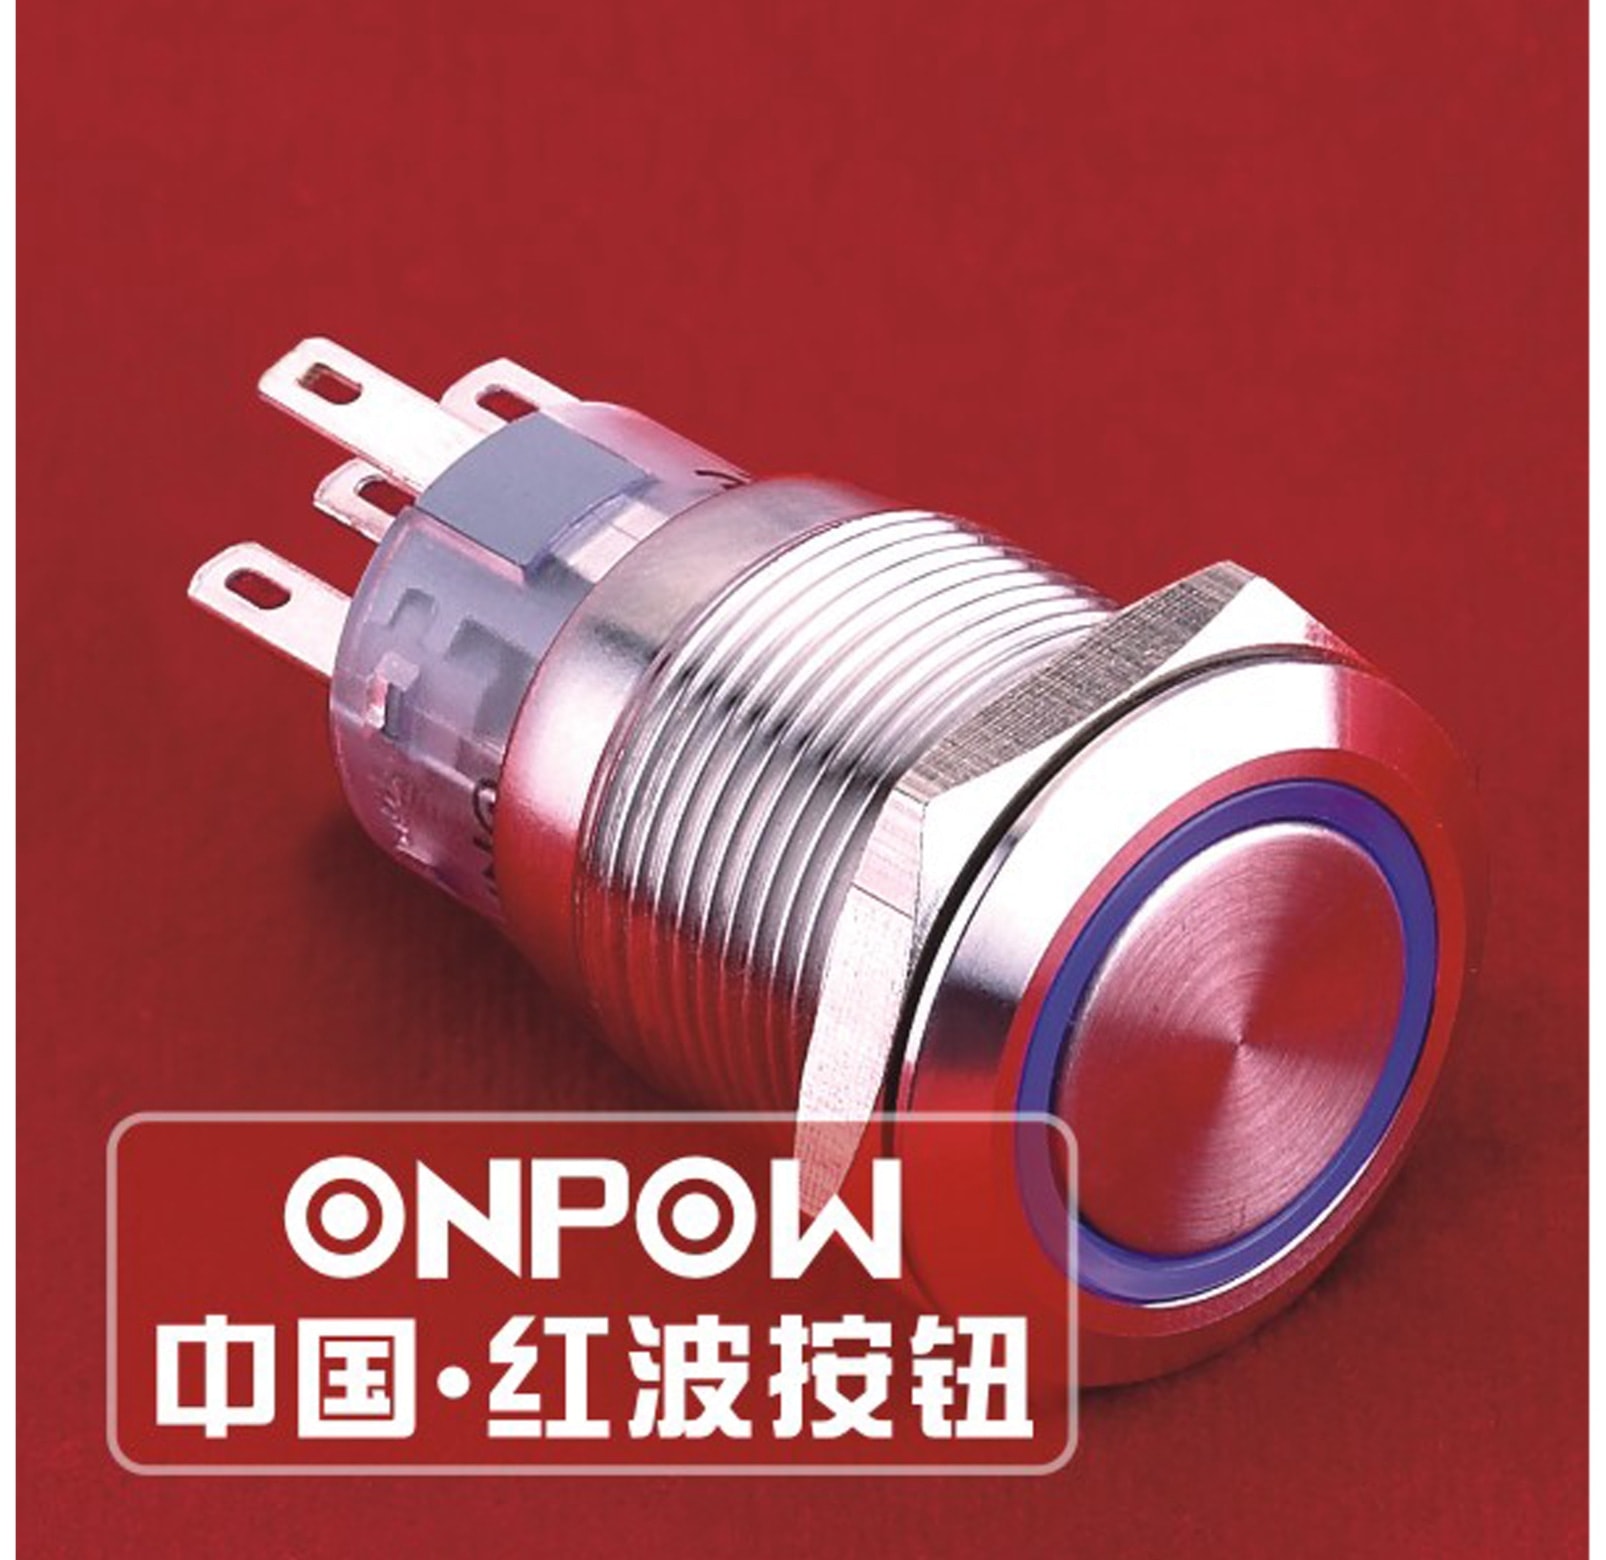 ONPOW Schalter, 24 V/DC, 1x Off/On, Beleuchtung rot, Lötanschluss, flach rund, Edelstahl, 19 mm